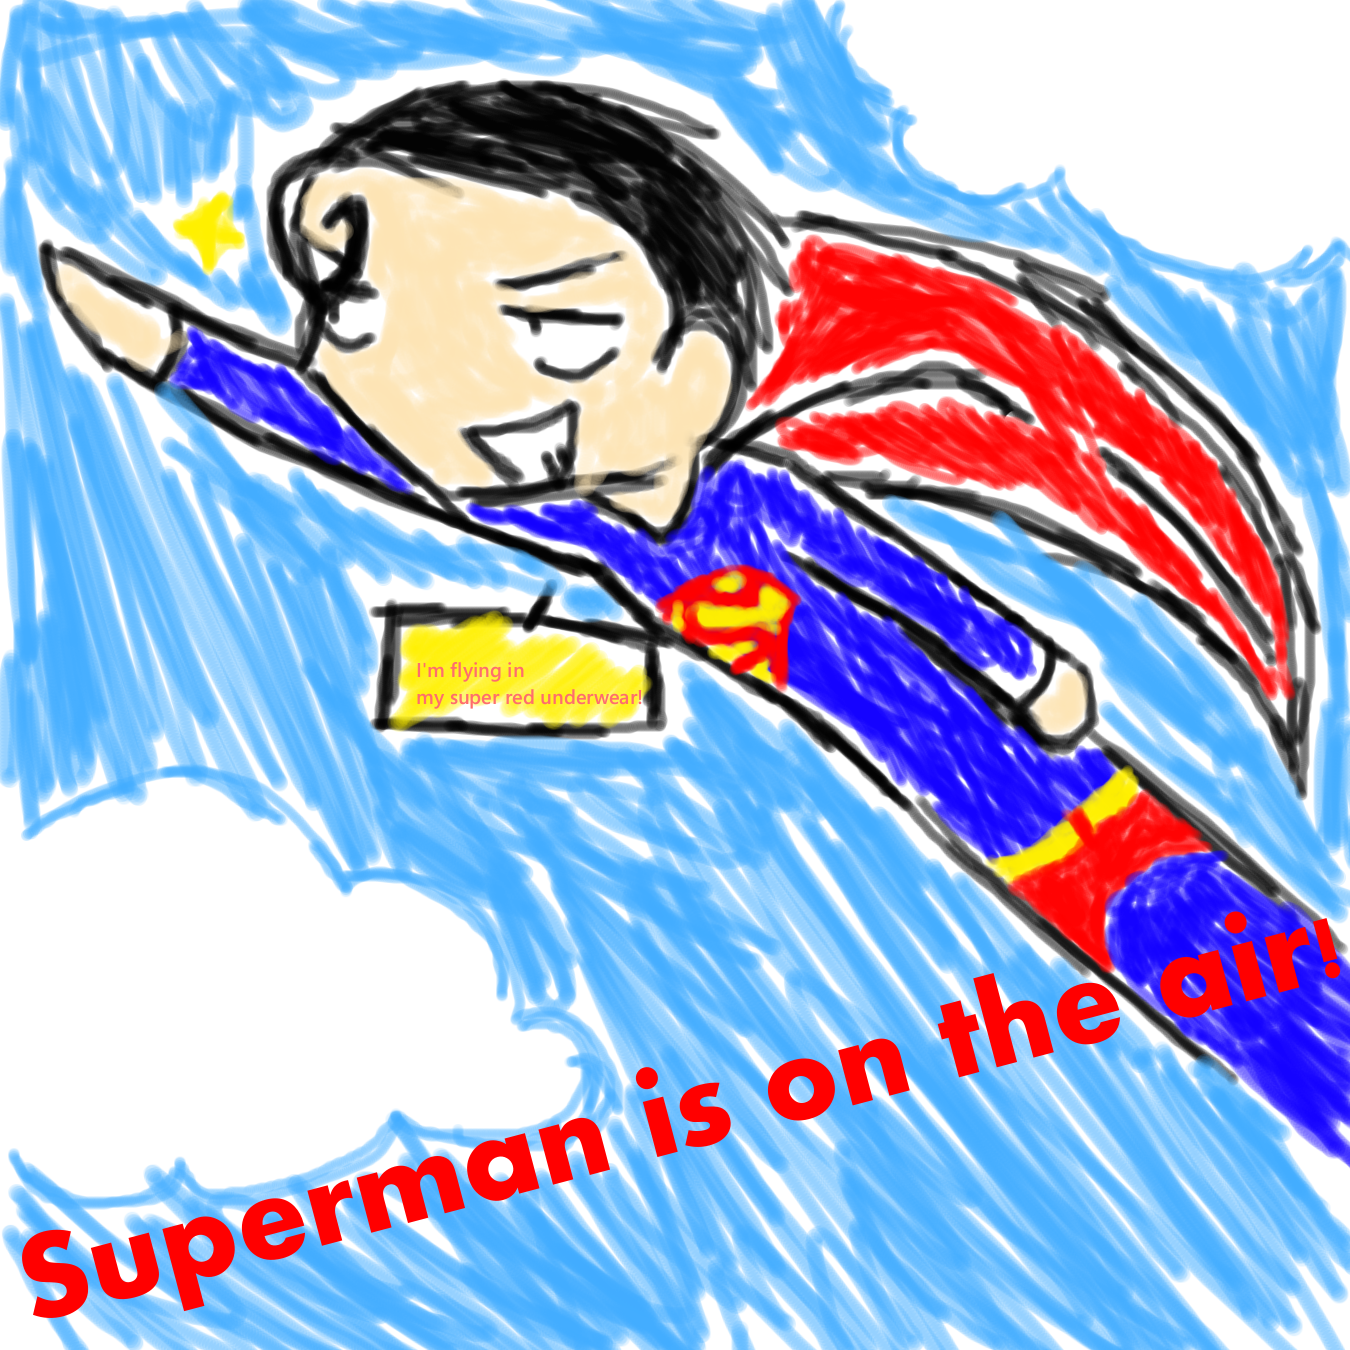 Super Duper Man by kamoku_hito